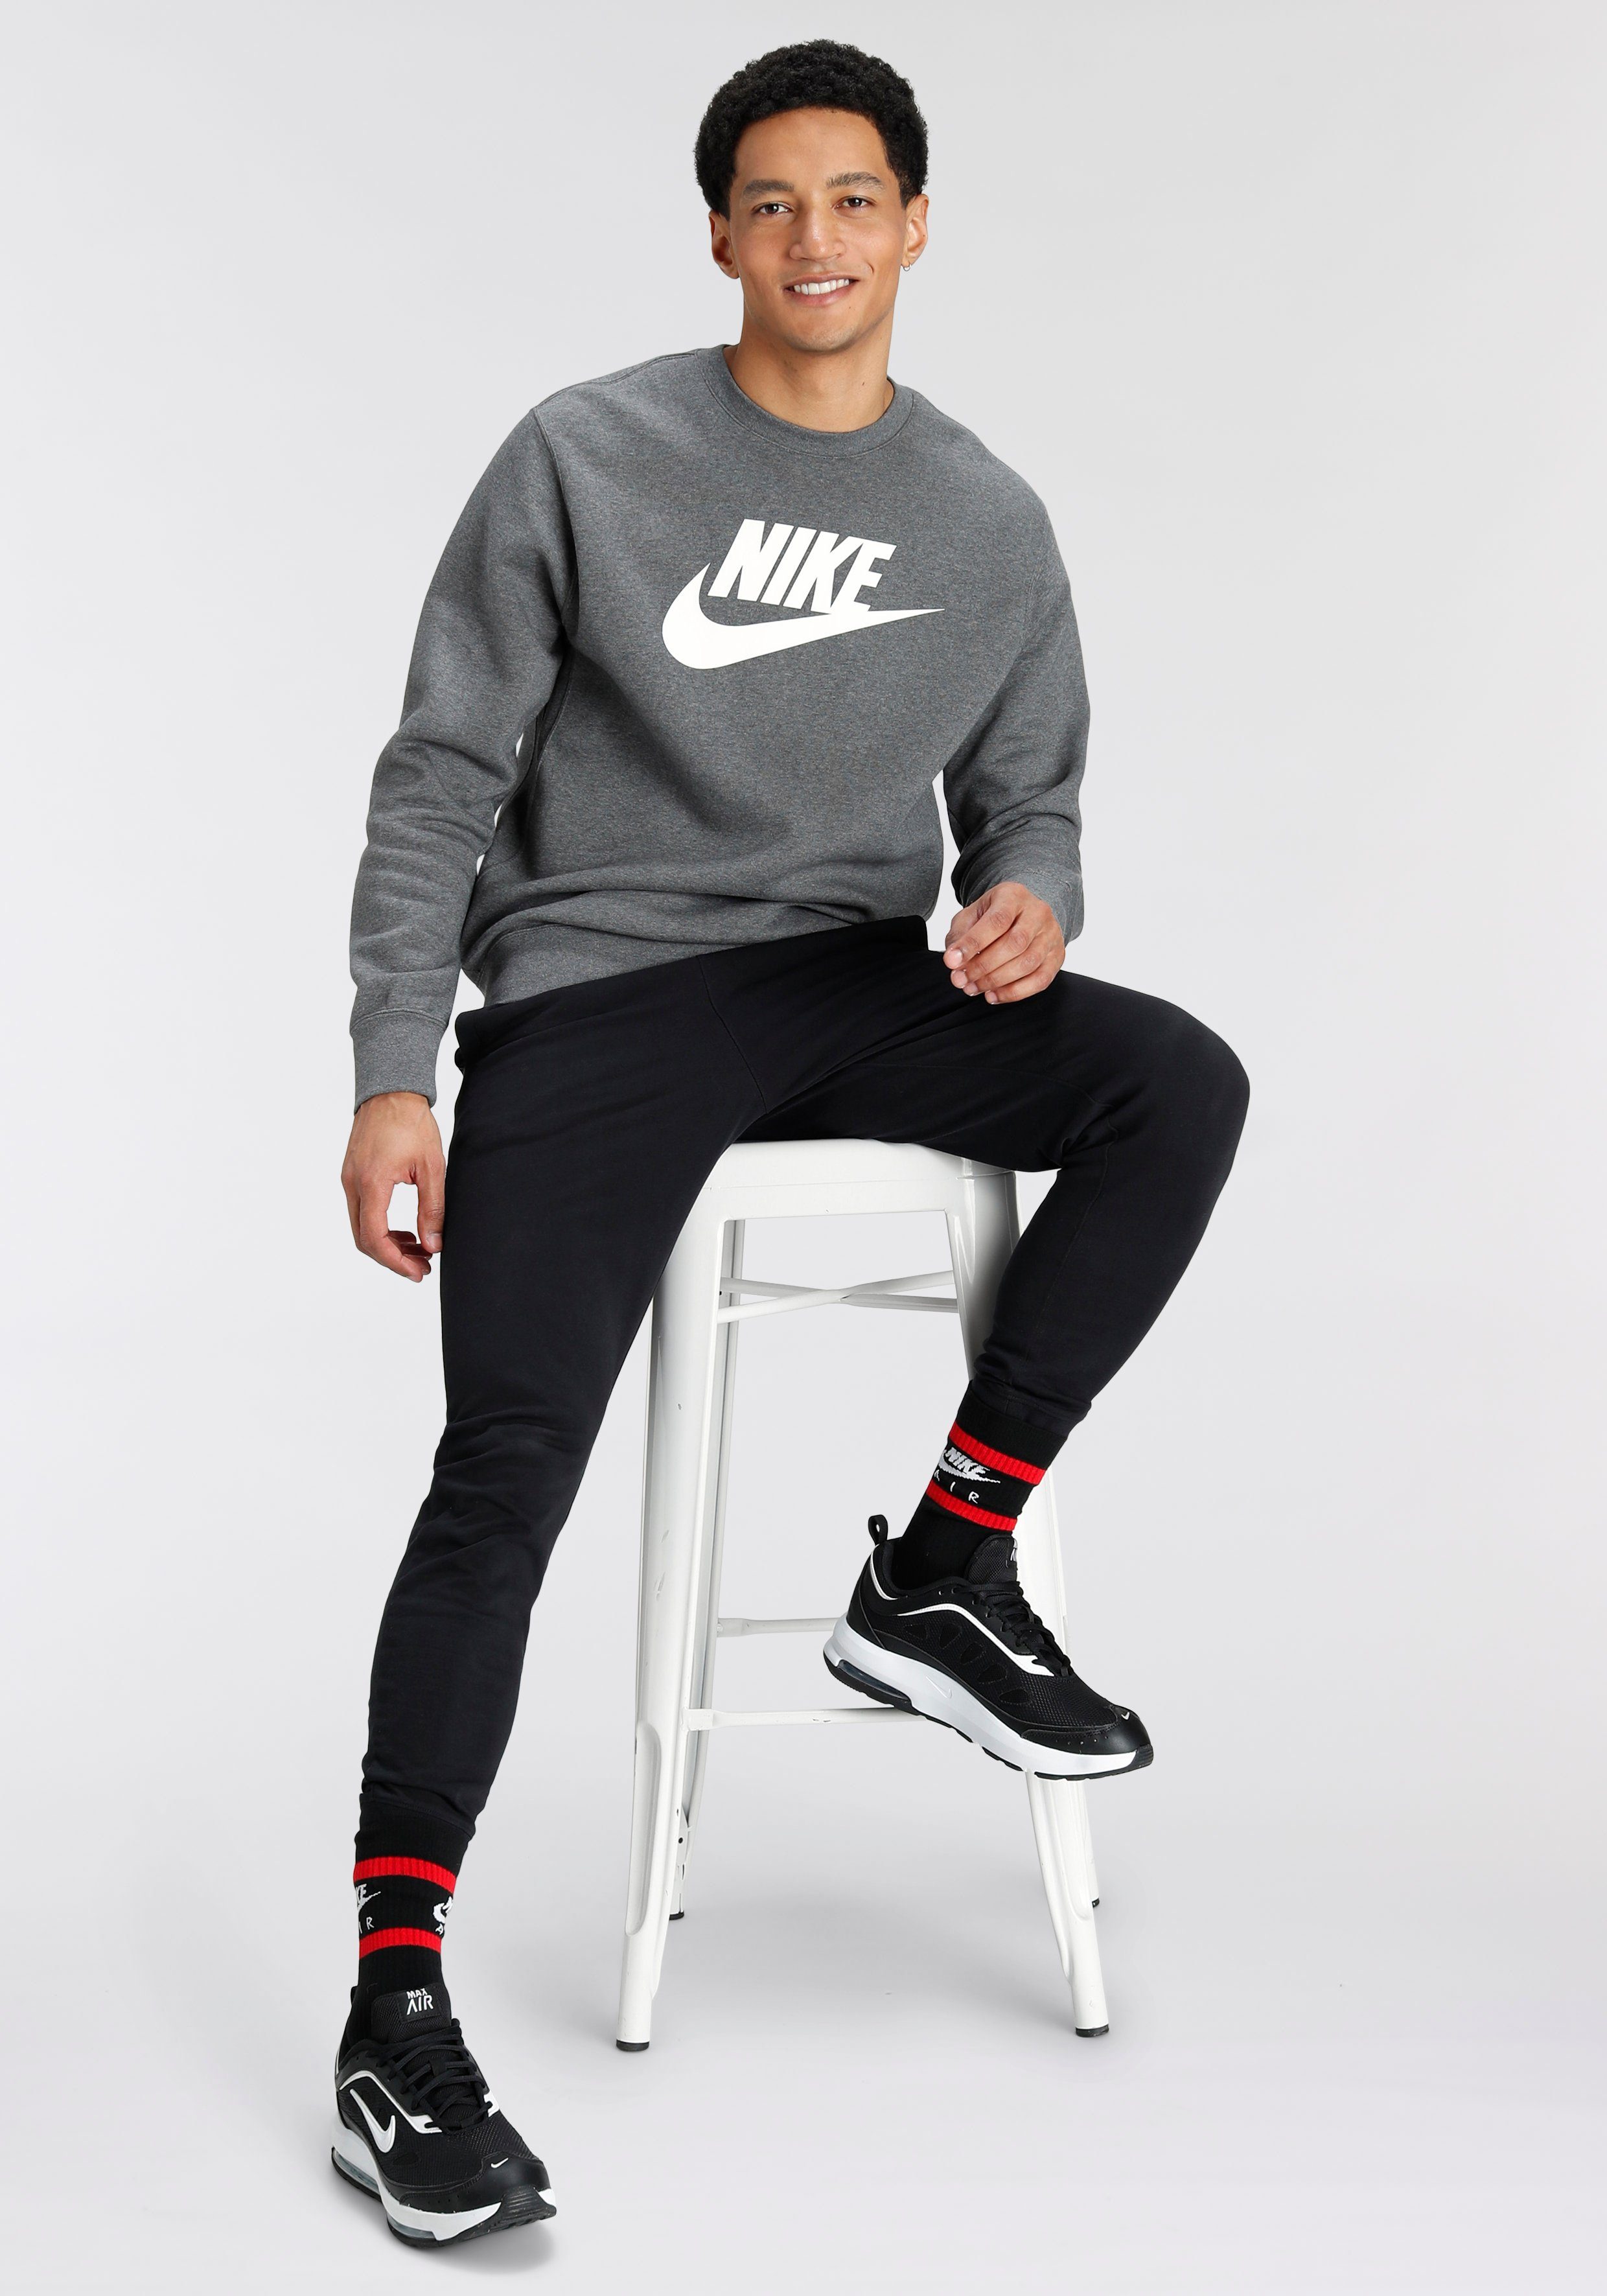 Nike Sportswear Sweatshirt Club Fleece Men's HEATHR CHARCOAL Graphic Crew